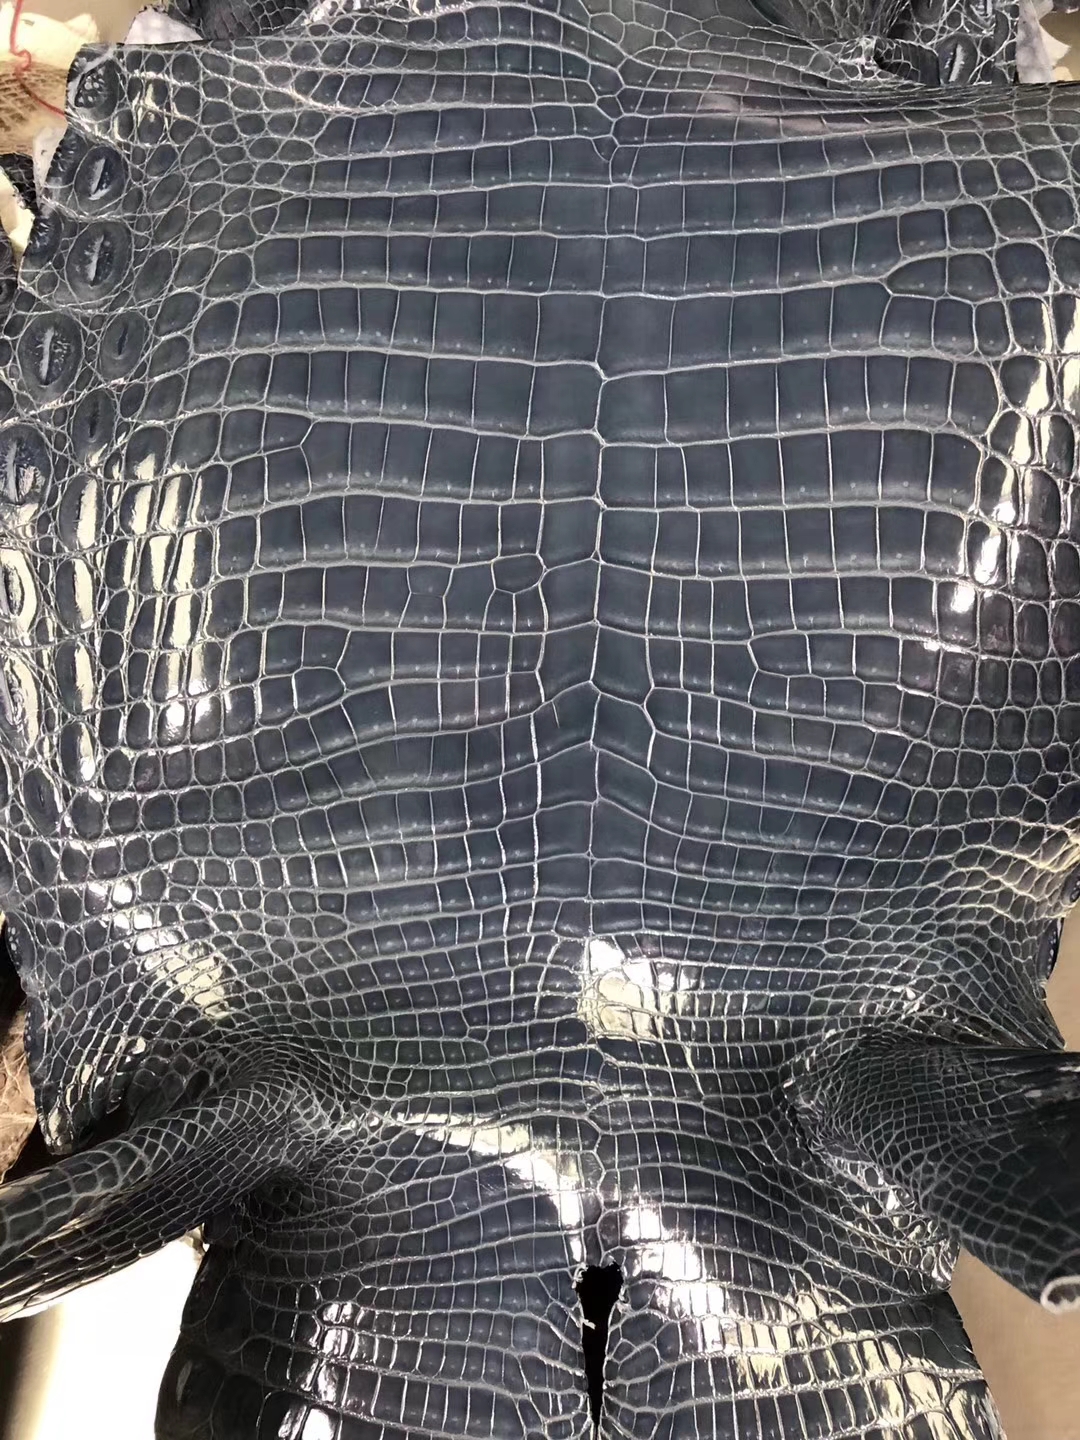 Hermes Shiny Crocodile Leather in N7 Blue Tampete Can Order Birkin/Kelly Bag